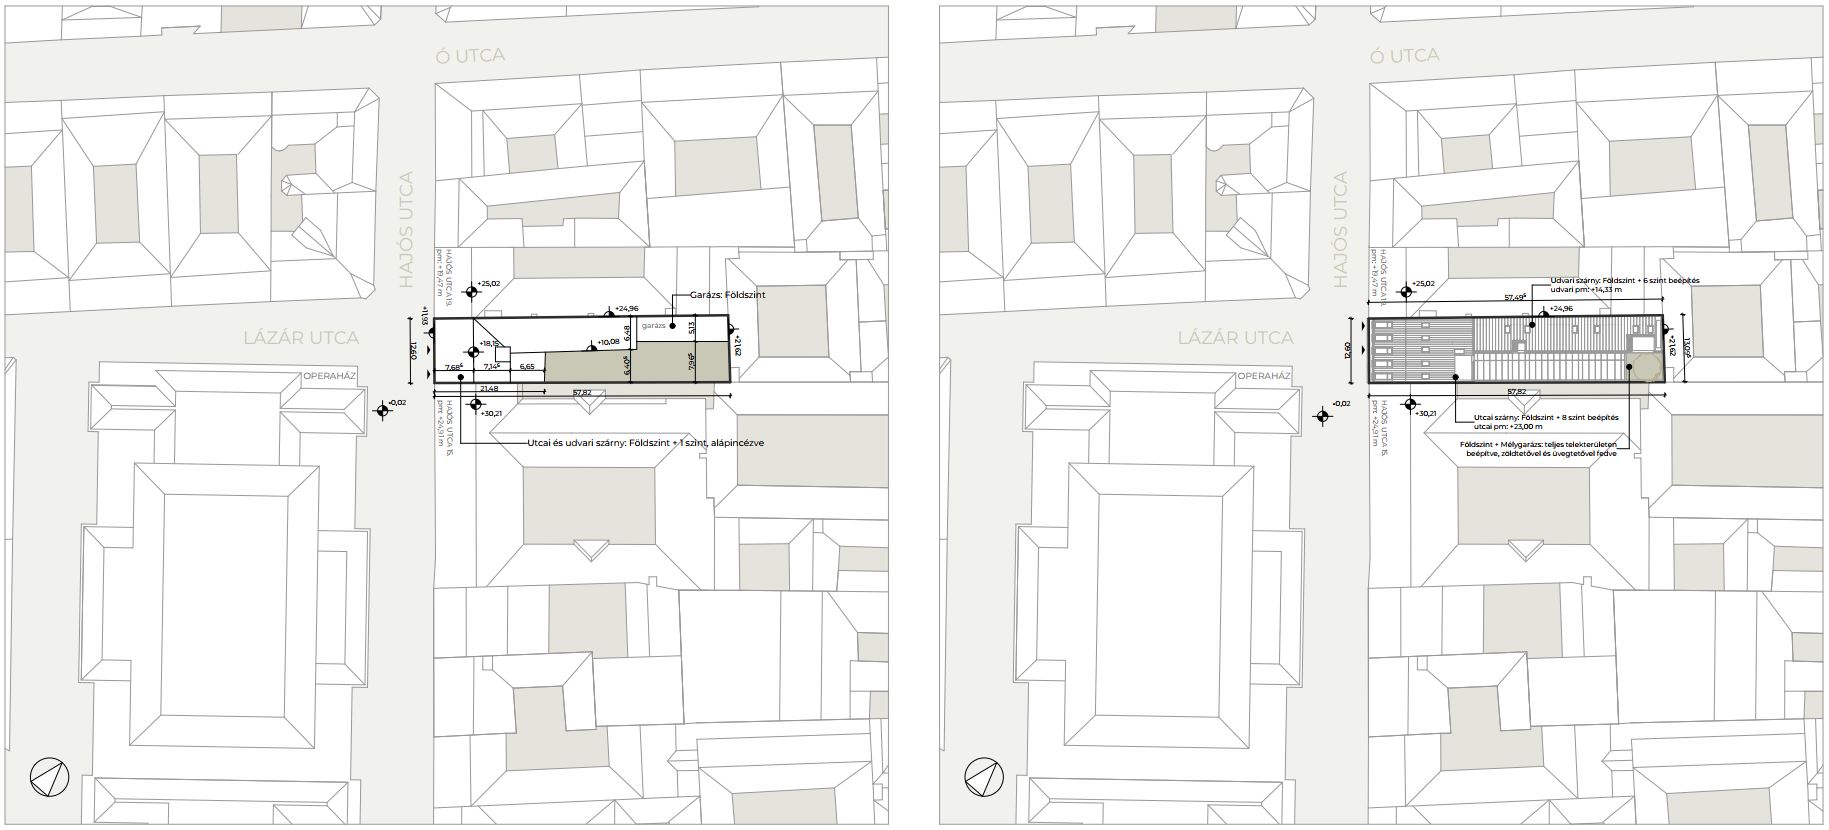 17 Hajós street site plan (existing vs planned)